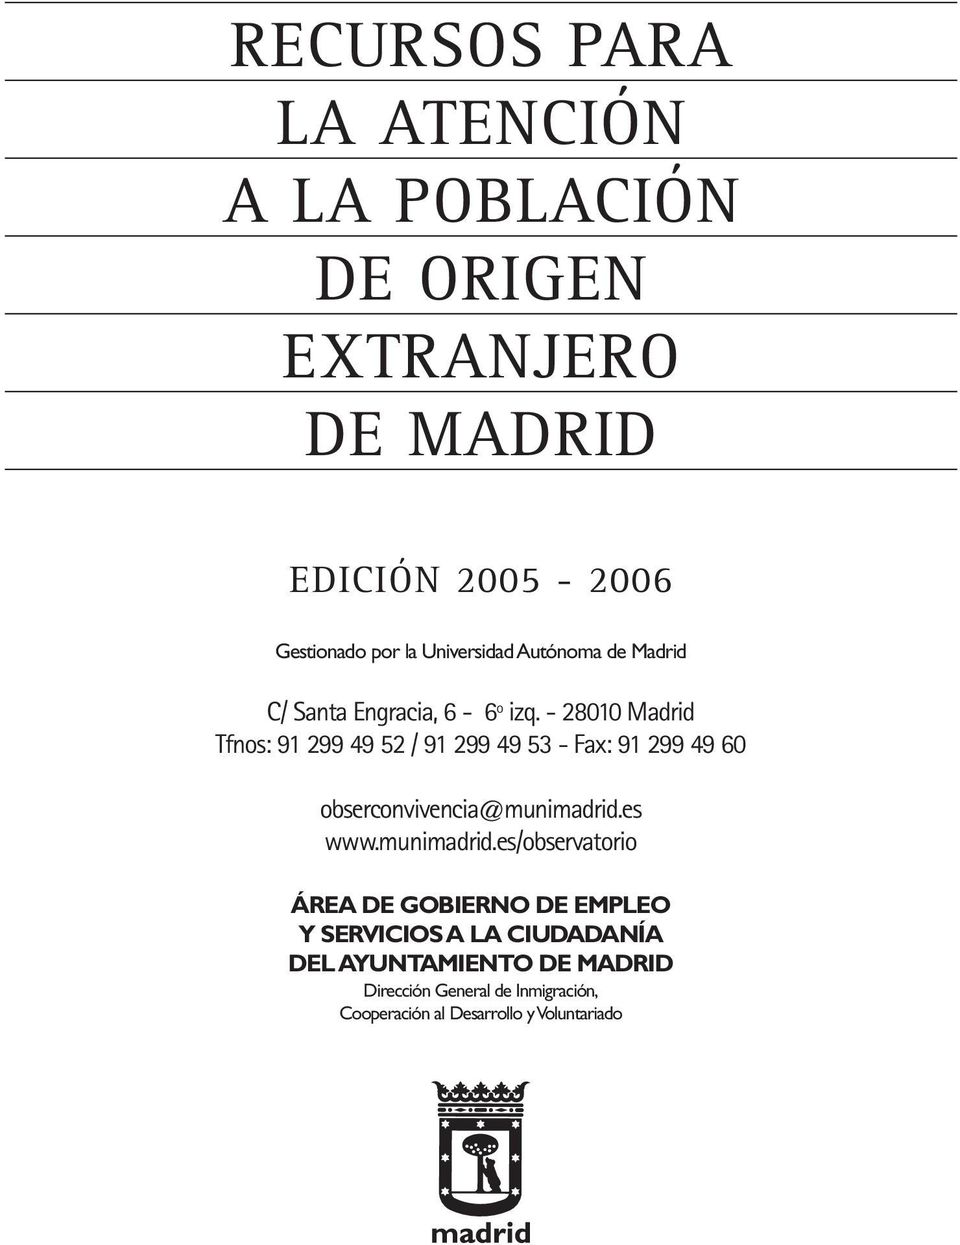 - 28010 Madrid Tfnos: 91 299 49 52 / 91 299 49 53 - Fax: 91 299 49 60 obserconvivencia@munimadrid.es www.